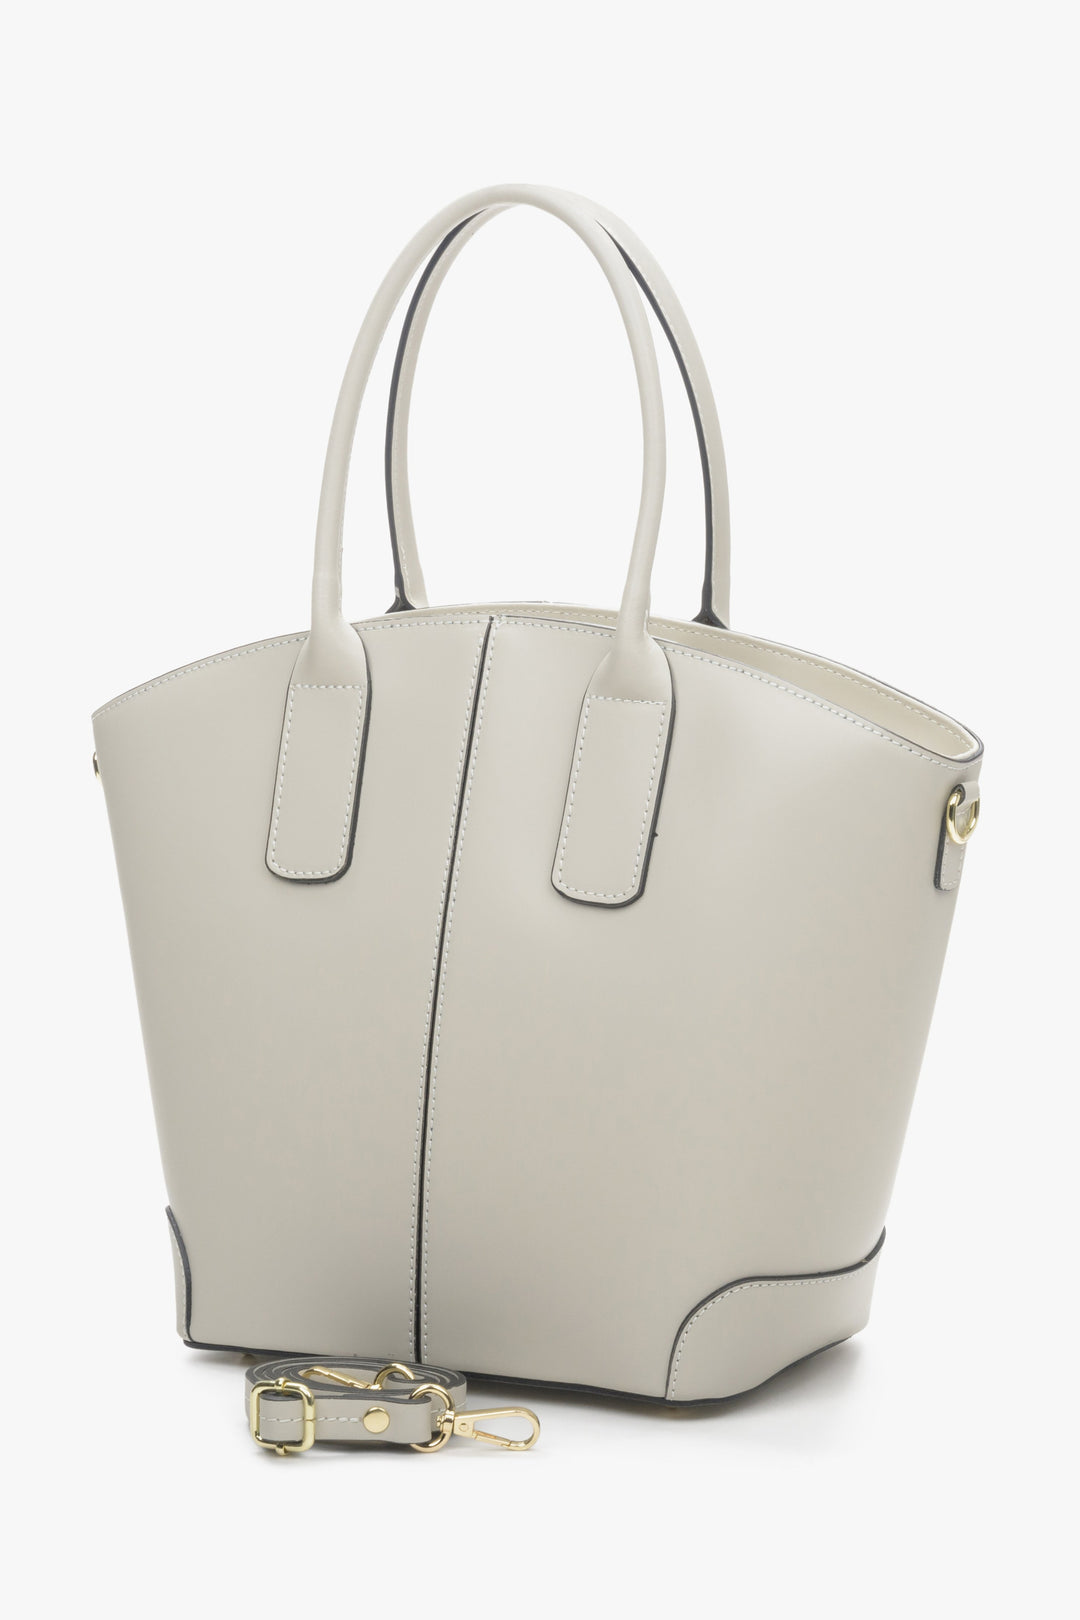 Women's light beige shopper bag made of genuine leather.